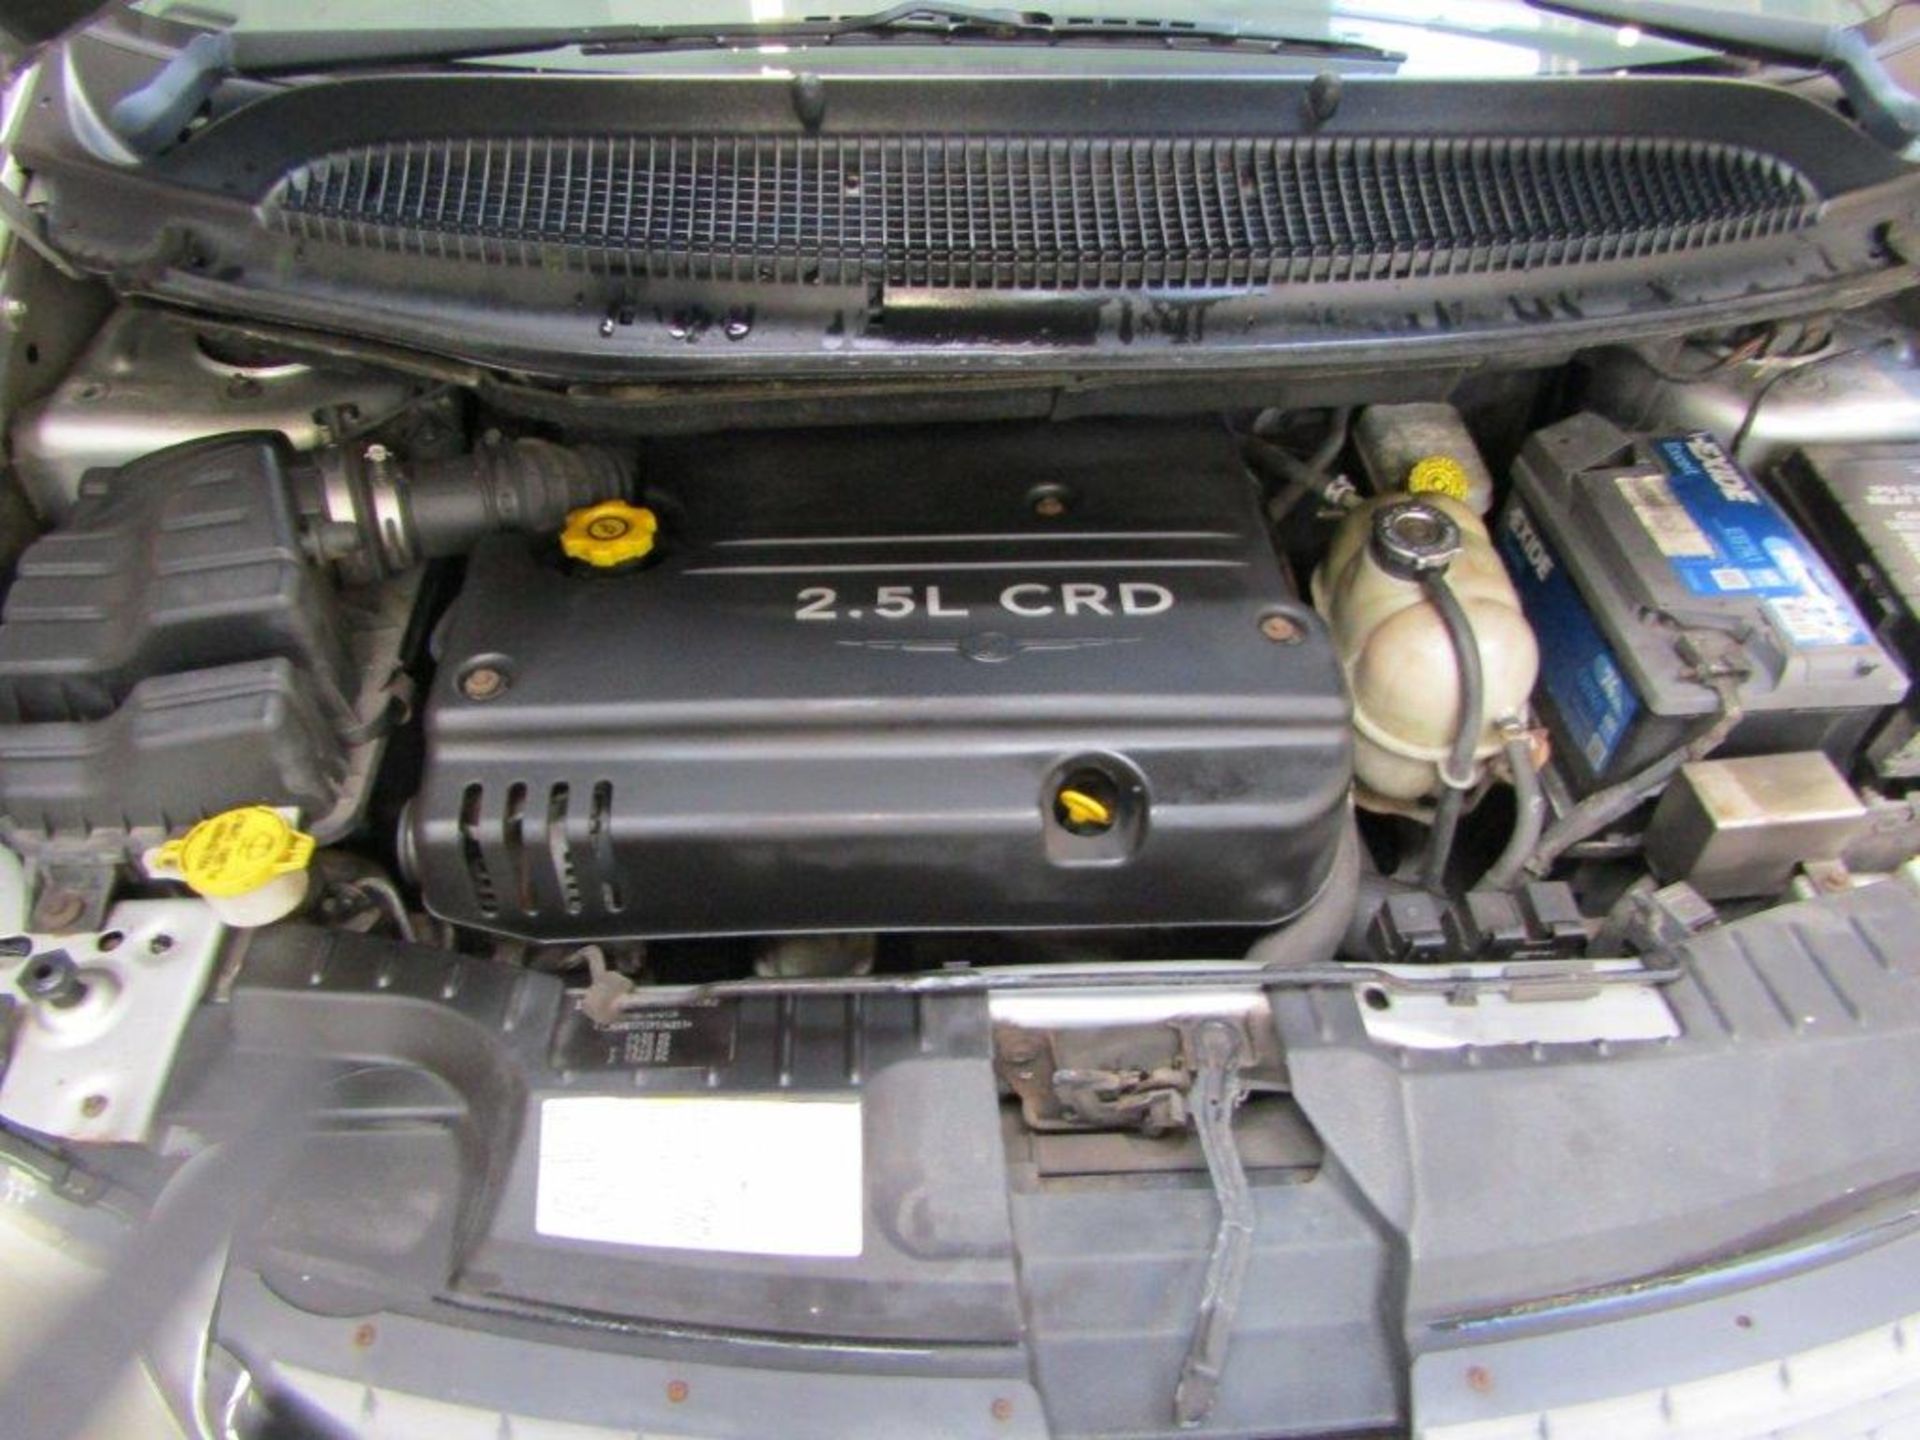 03 03 Chrysler Grand Voyager CRD - Image 24 of 25